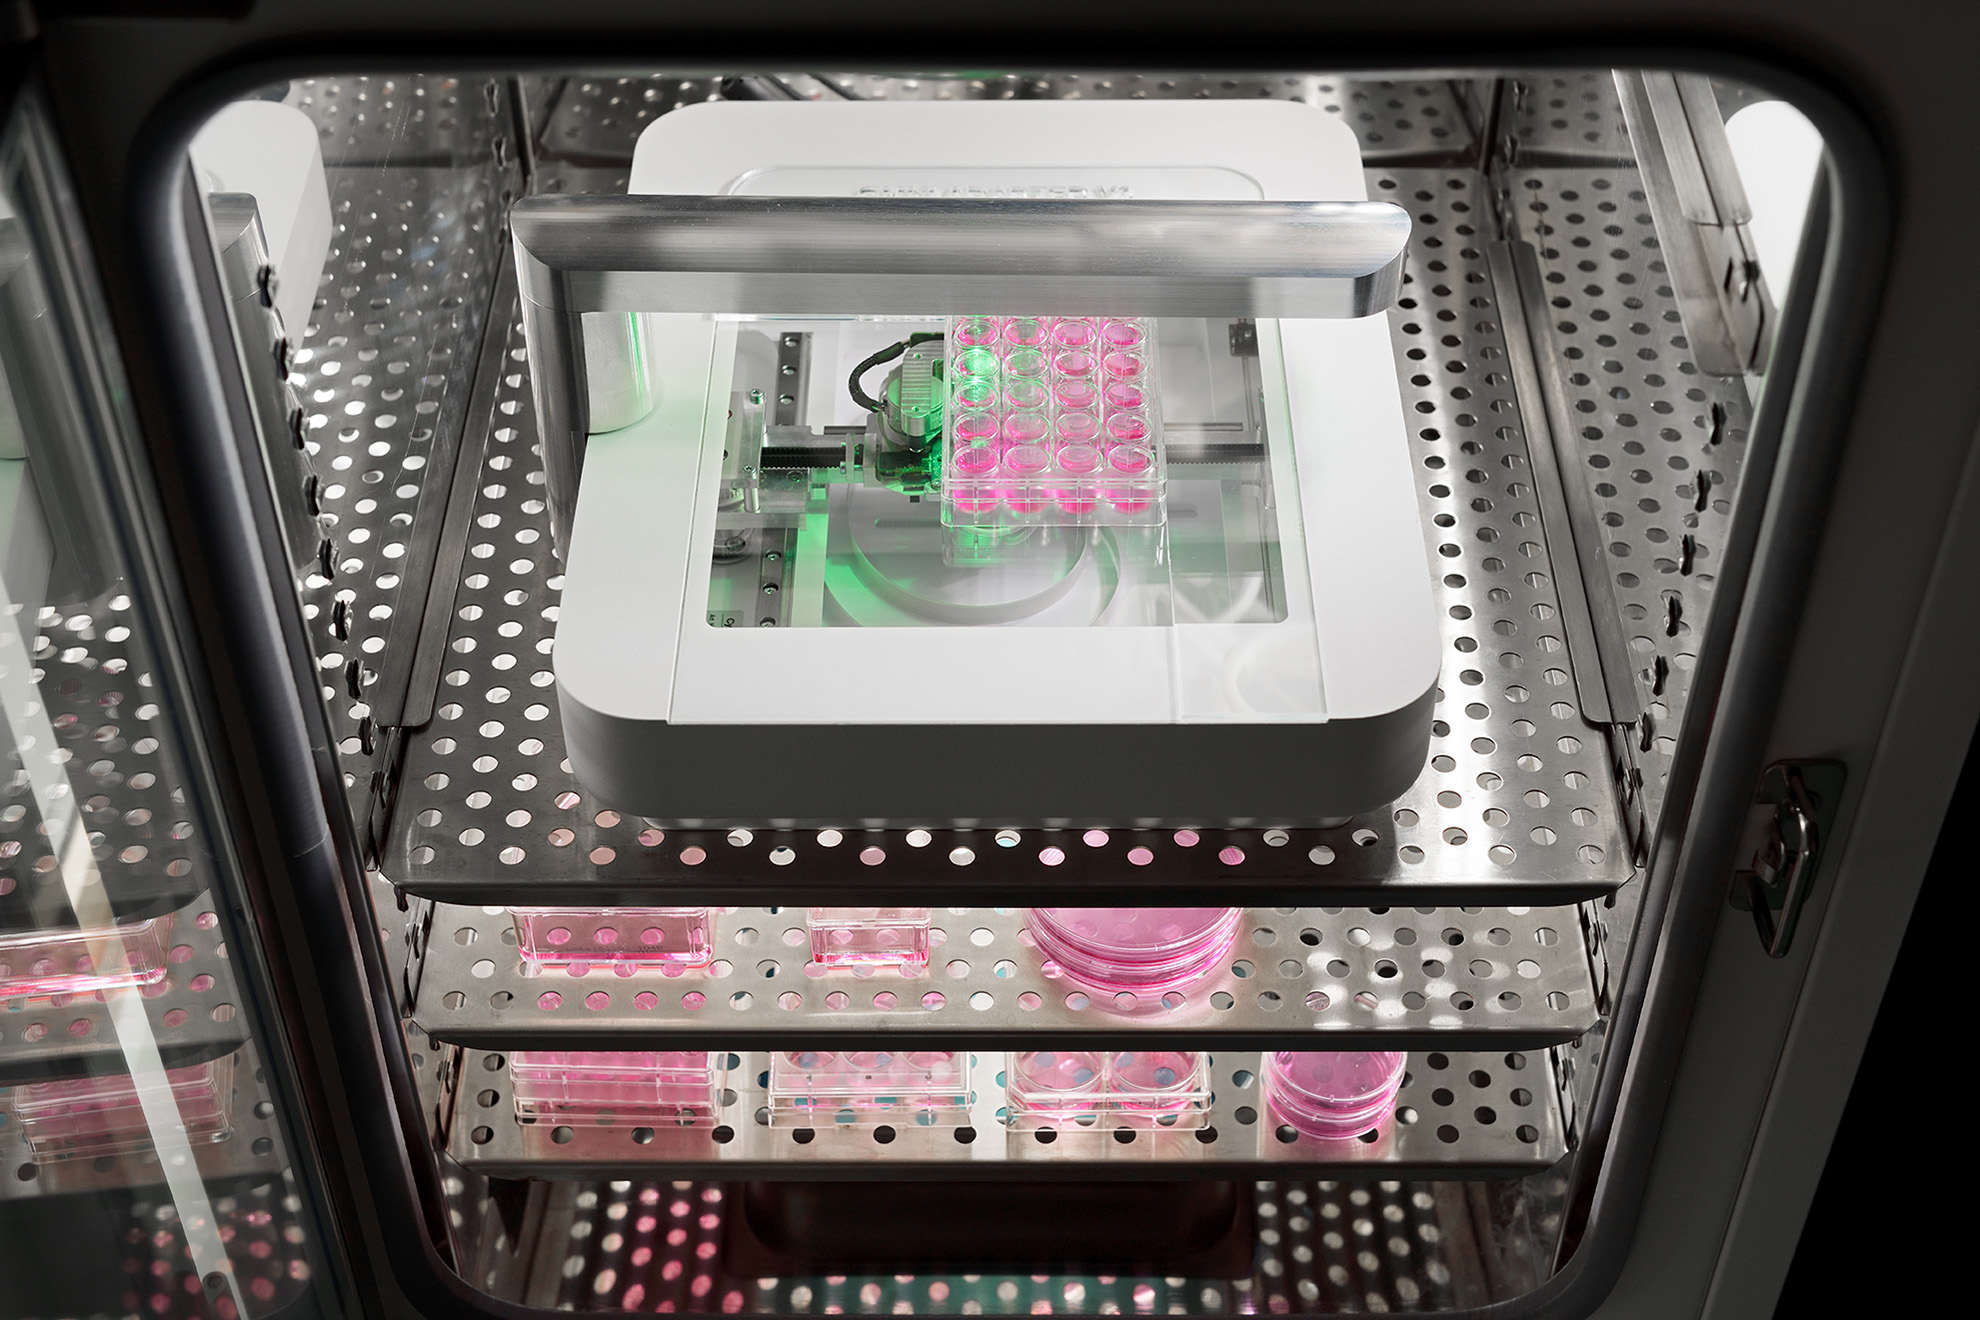 Analytical microscope inside an incubator